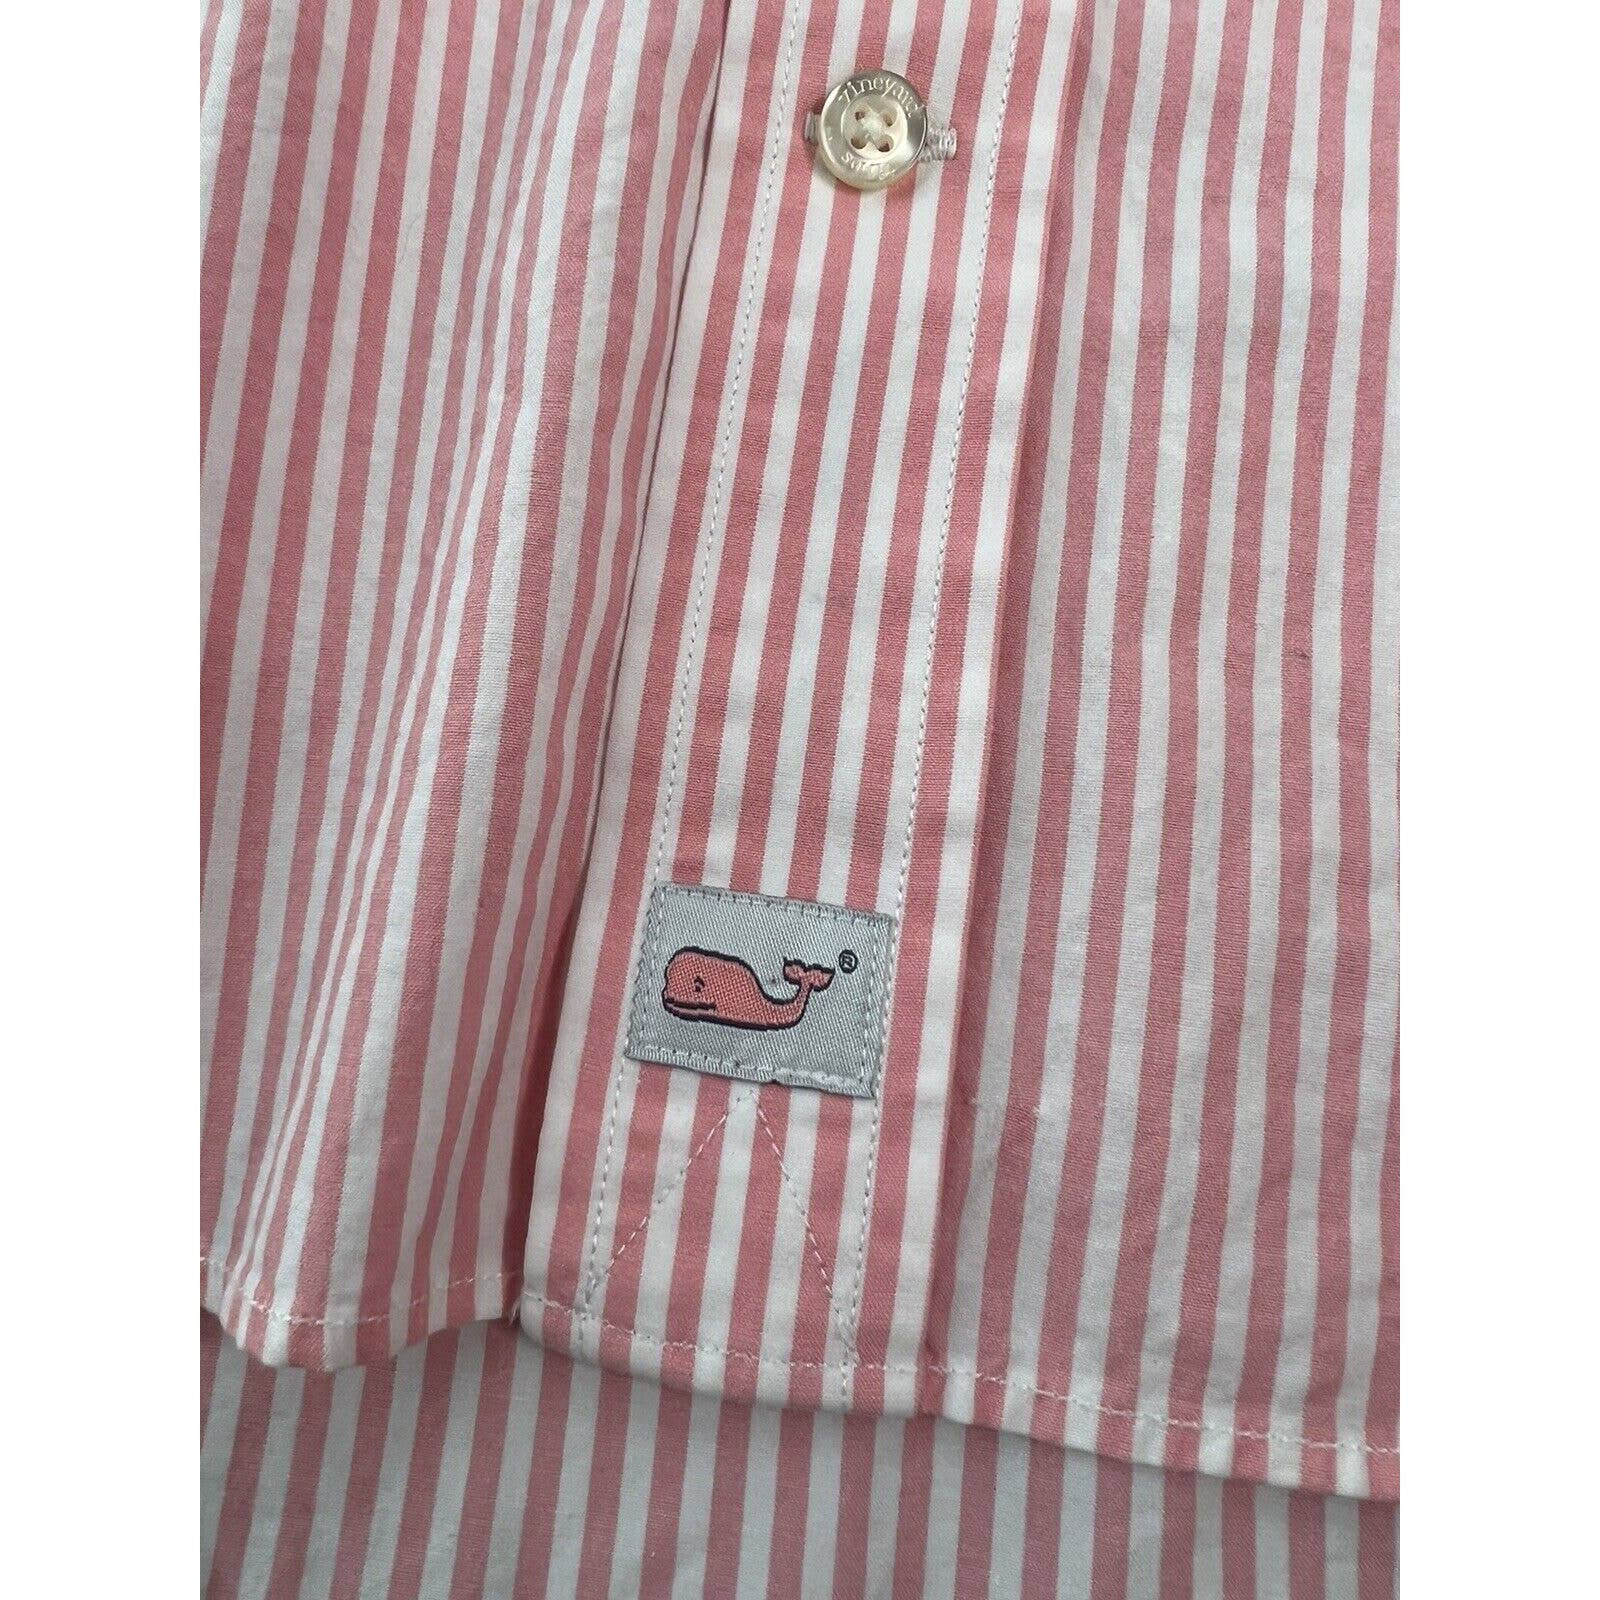 Vineyard Vines Murray Shirt Men’s Small Button Down Long Sleeve Pink Striped